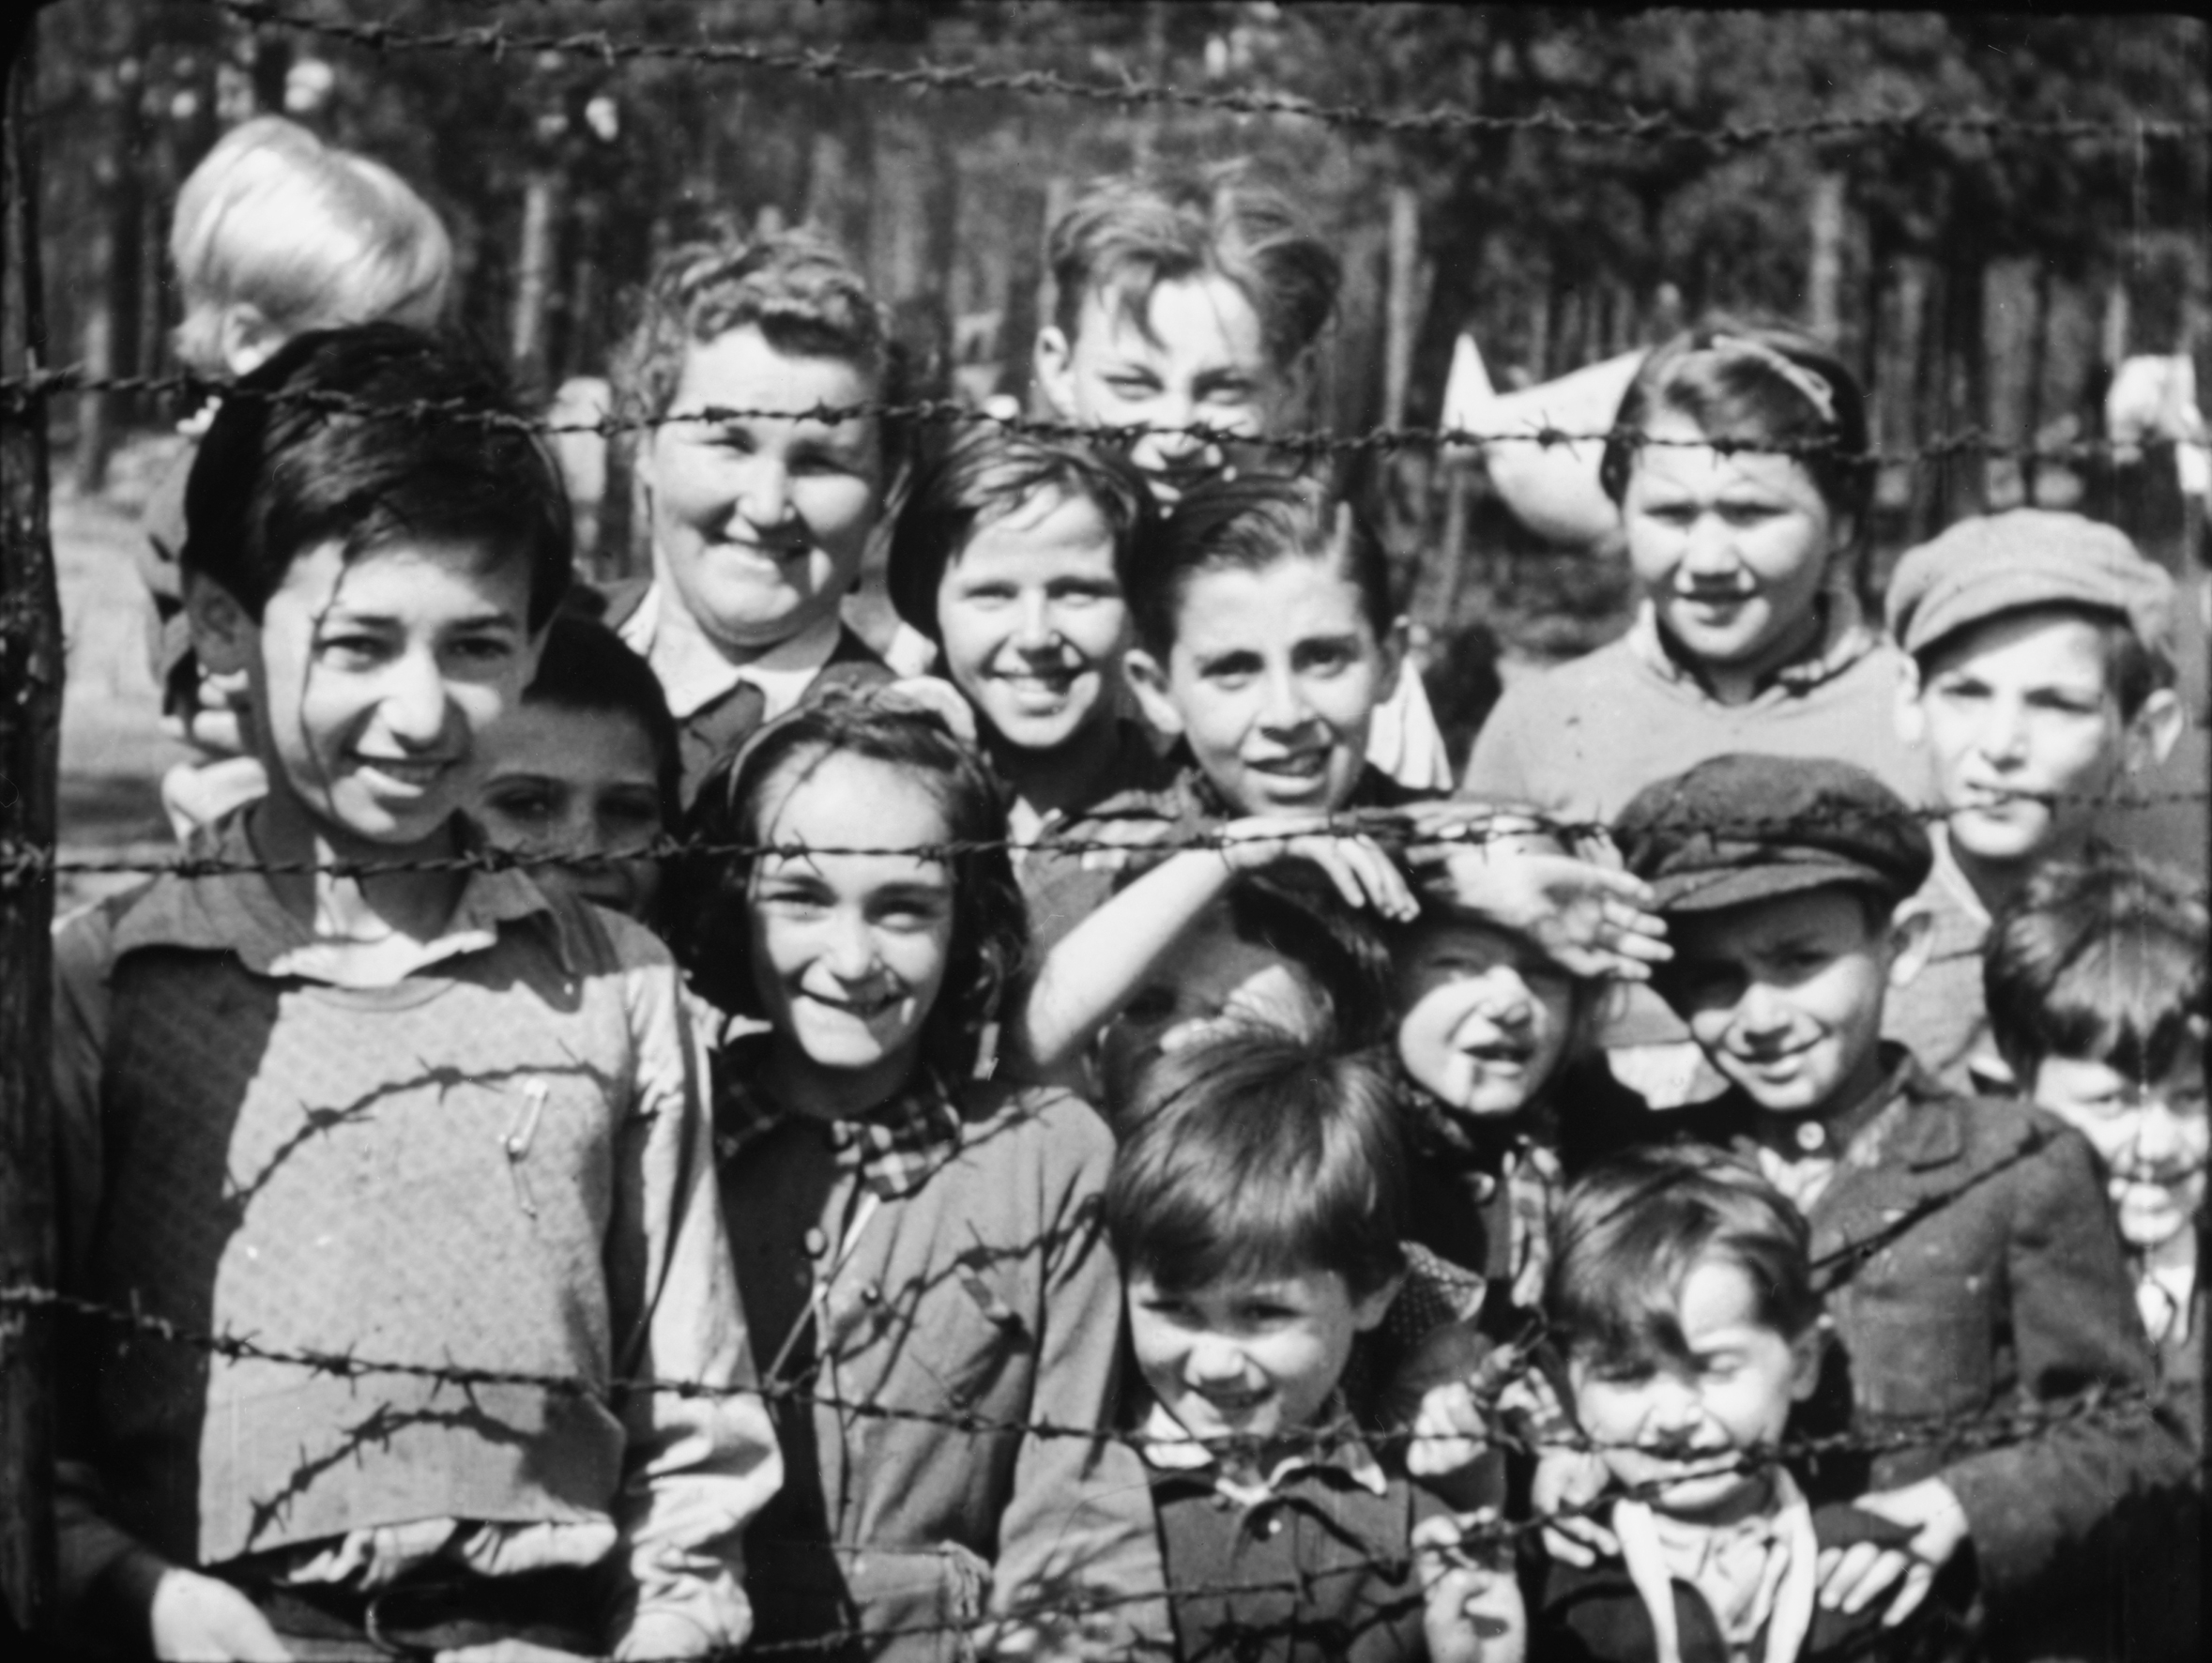 'Smiling children through barbed wire' taken by Sgt Lewis, 19-20 April 1945 IWM Film 1467.JPG